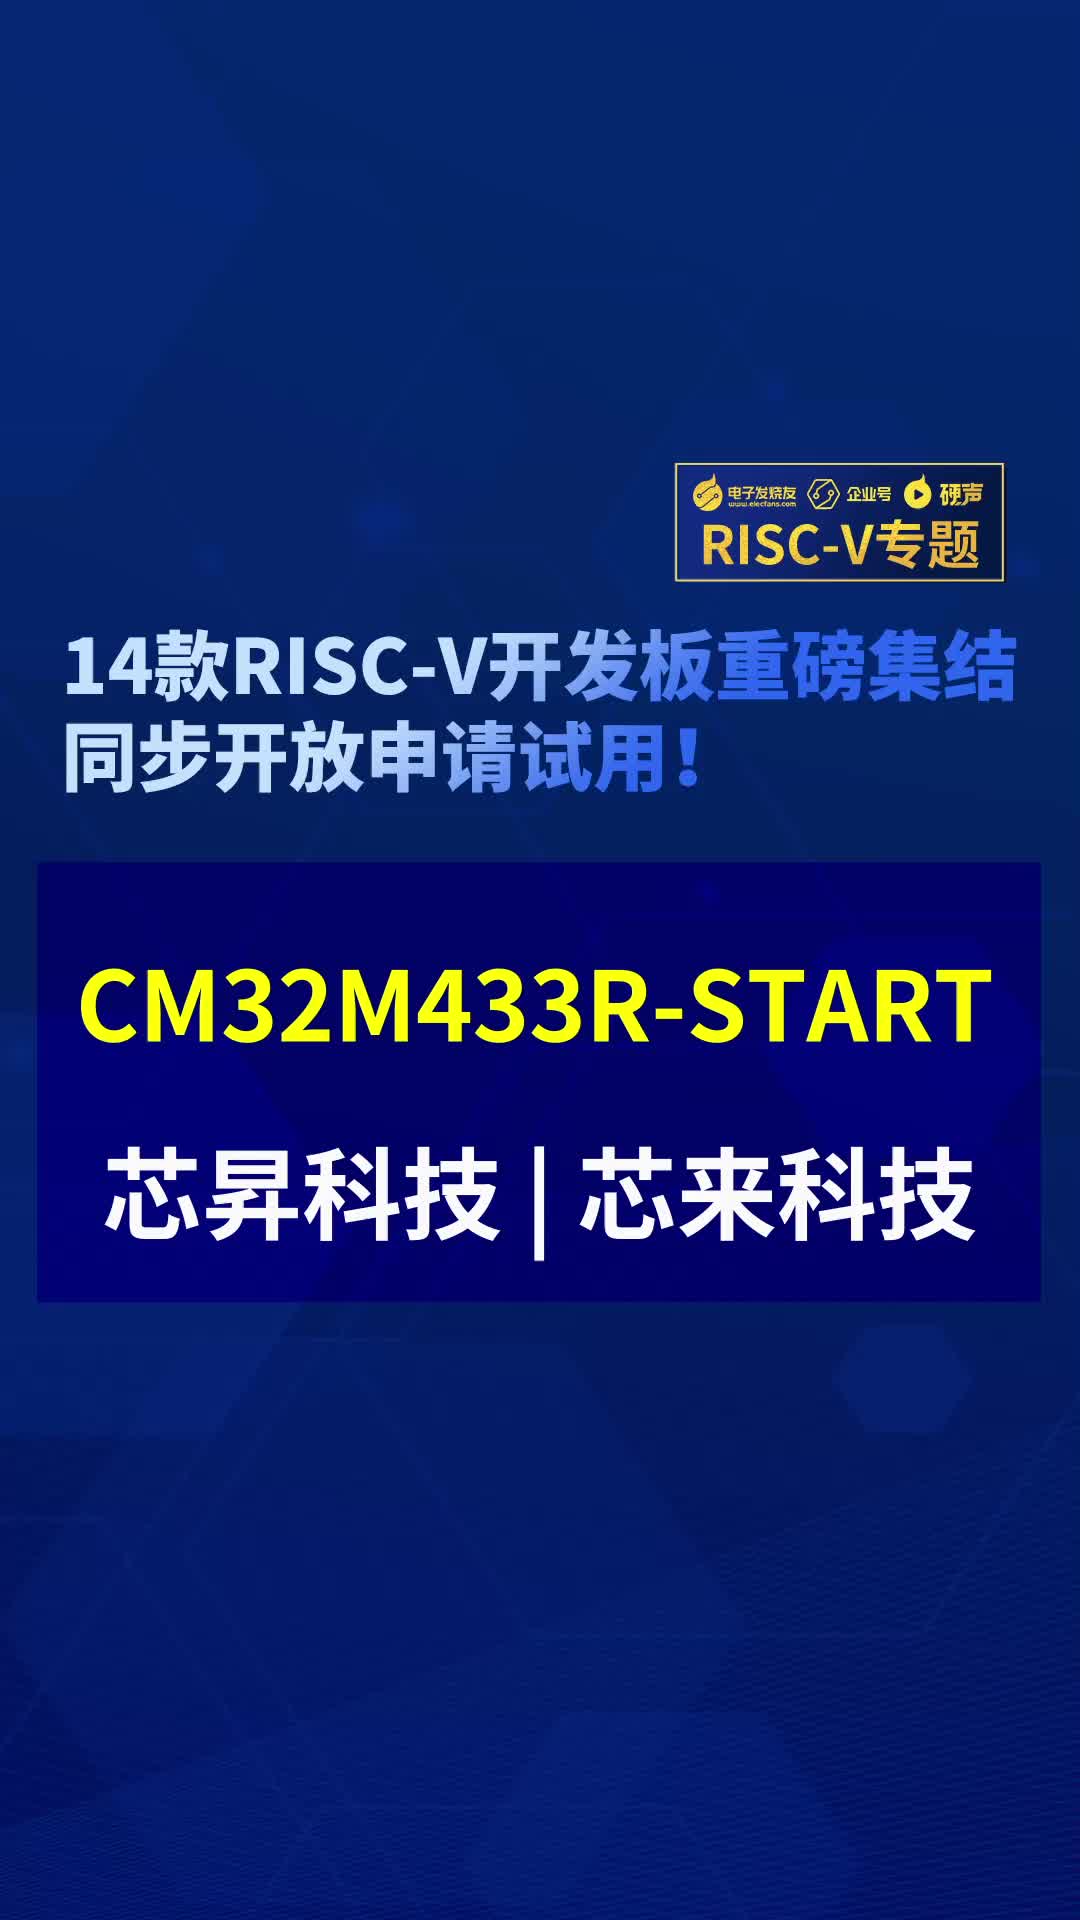 【RISC-V專題】芯昇科技RISC-V生態開發板首發試用#RISC-V開發板評測 